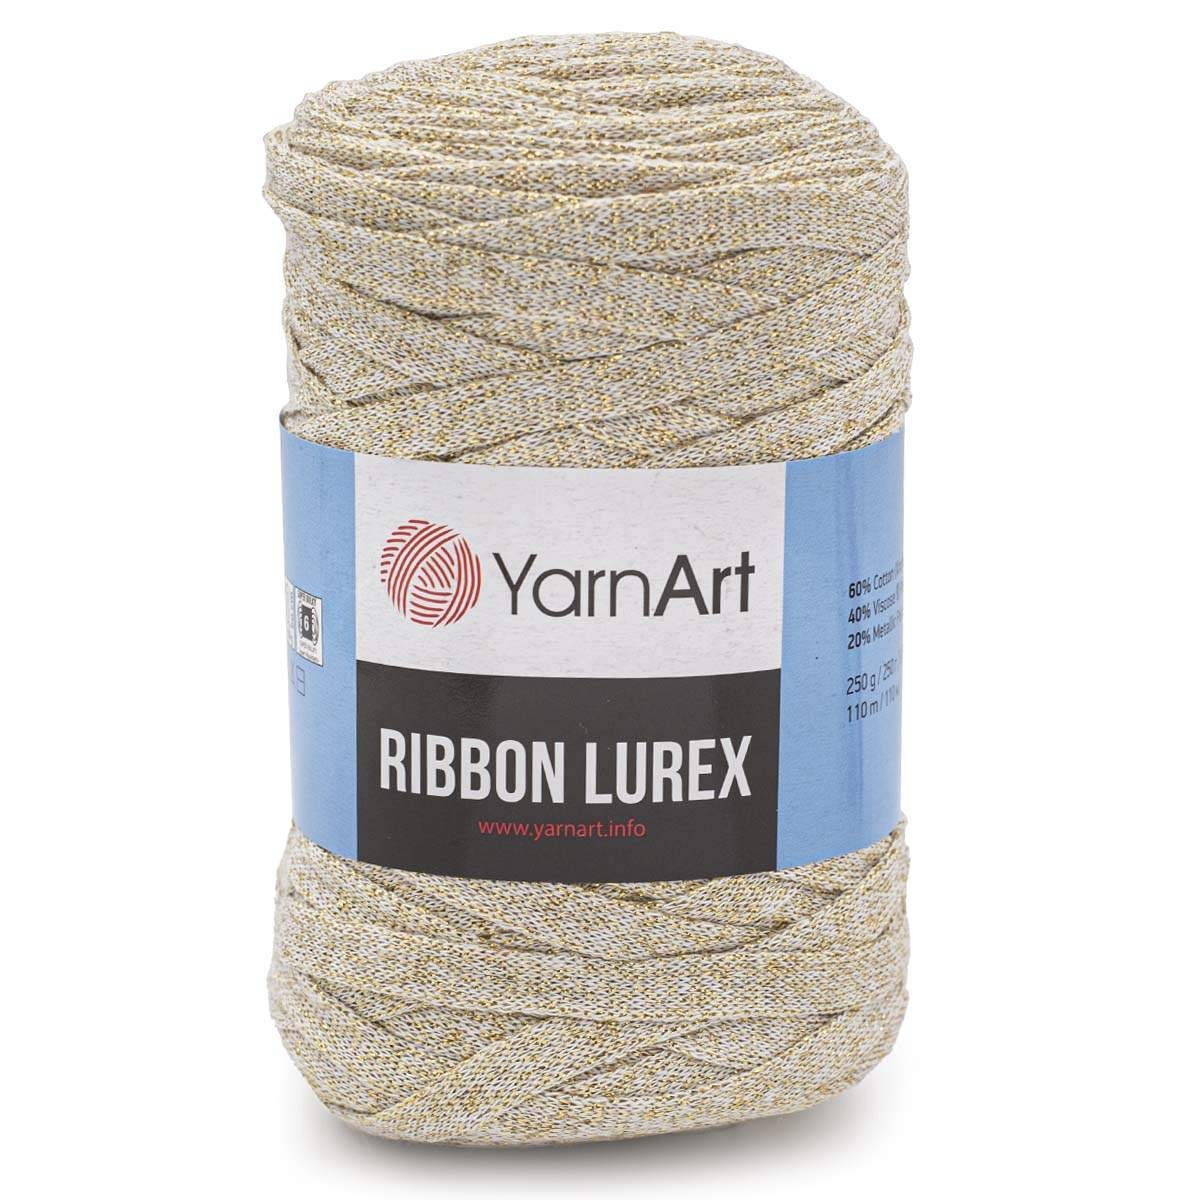 Scrubby Dishcloth Yarn Tough 50g Eyelash, Bath Blanket, Rug, Face Wash  Polyester Destash Worsted Kitchen Knitting Crochet 